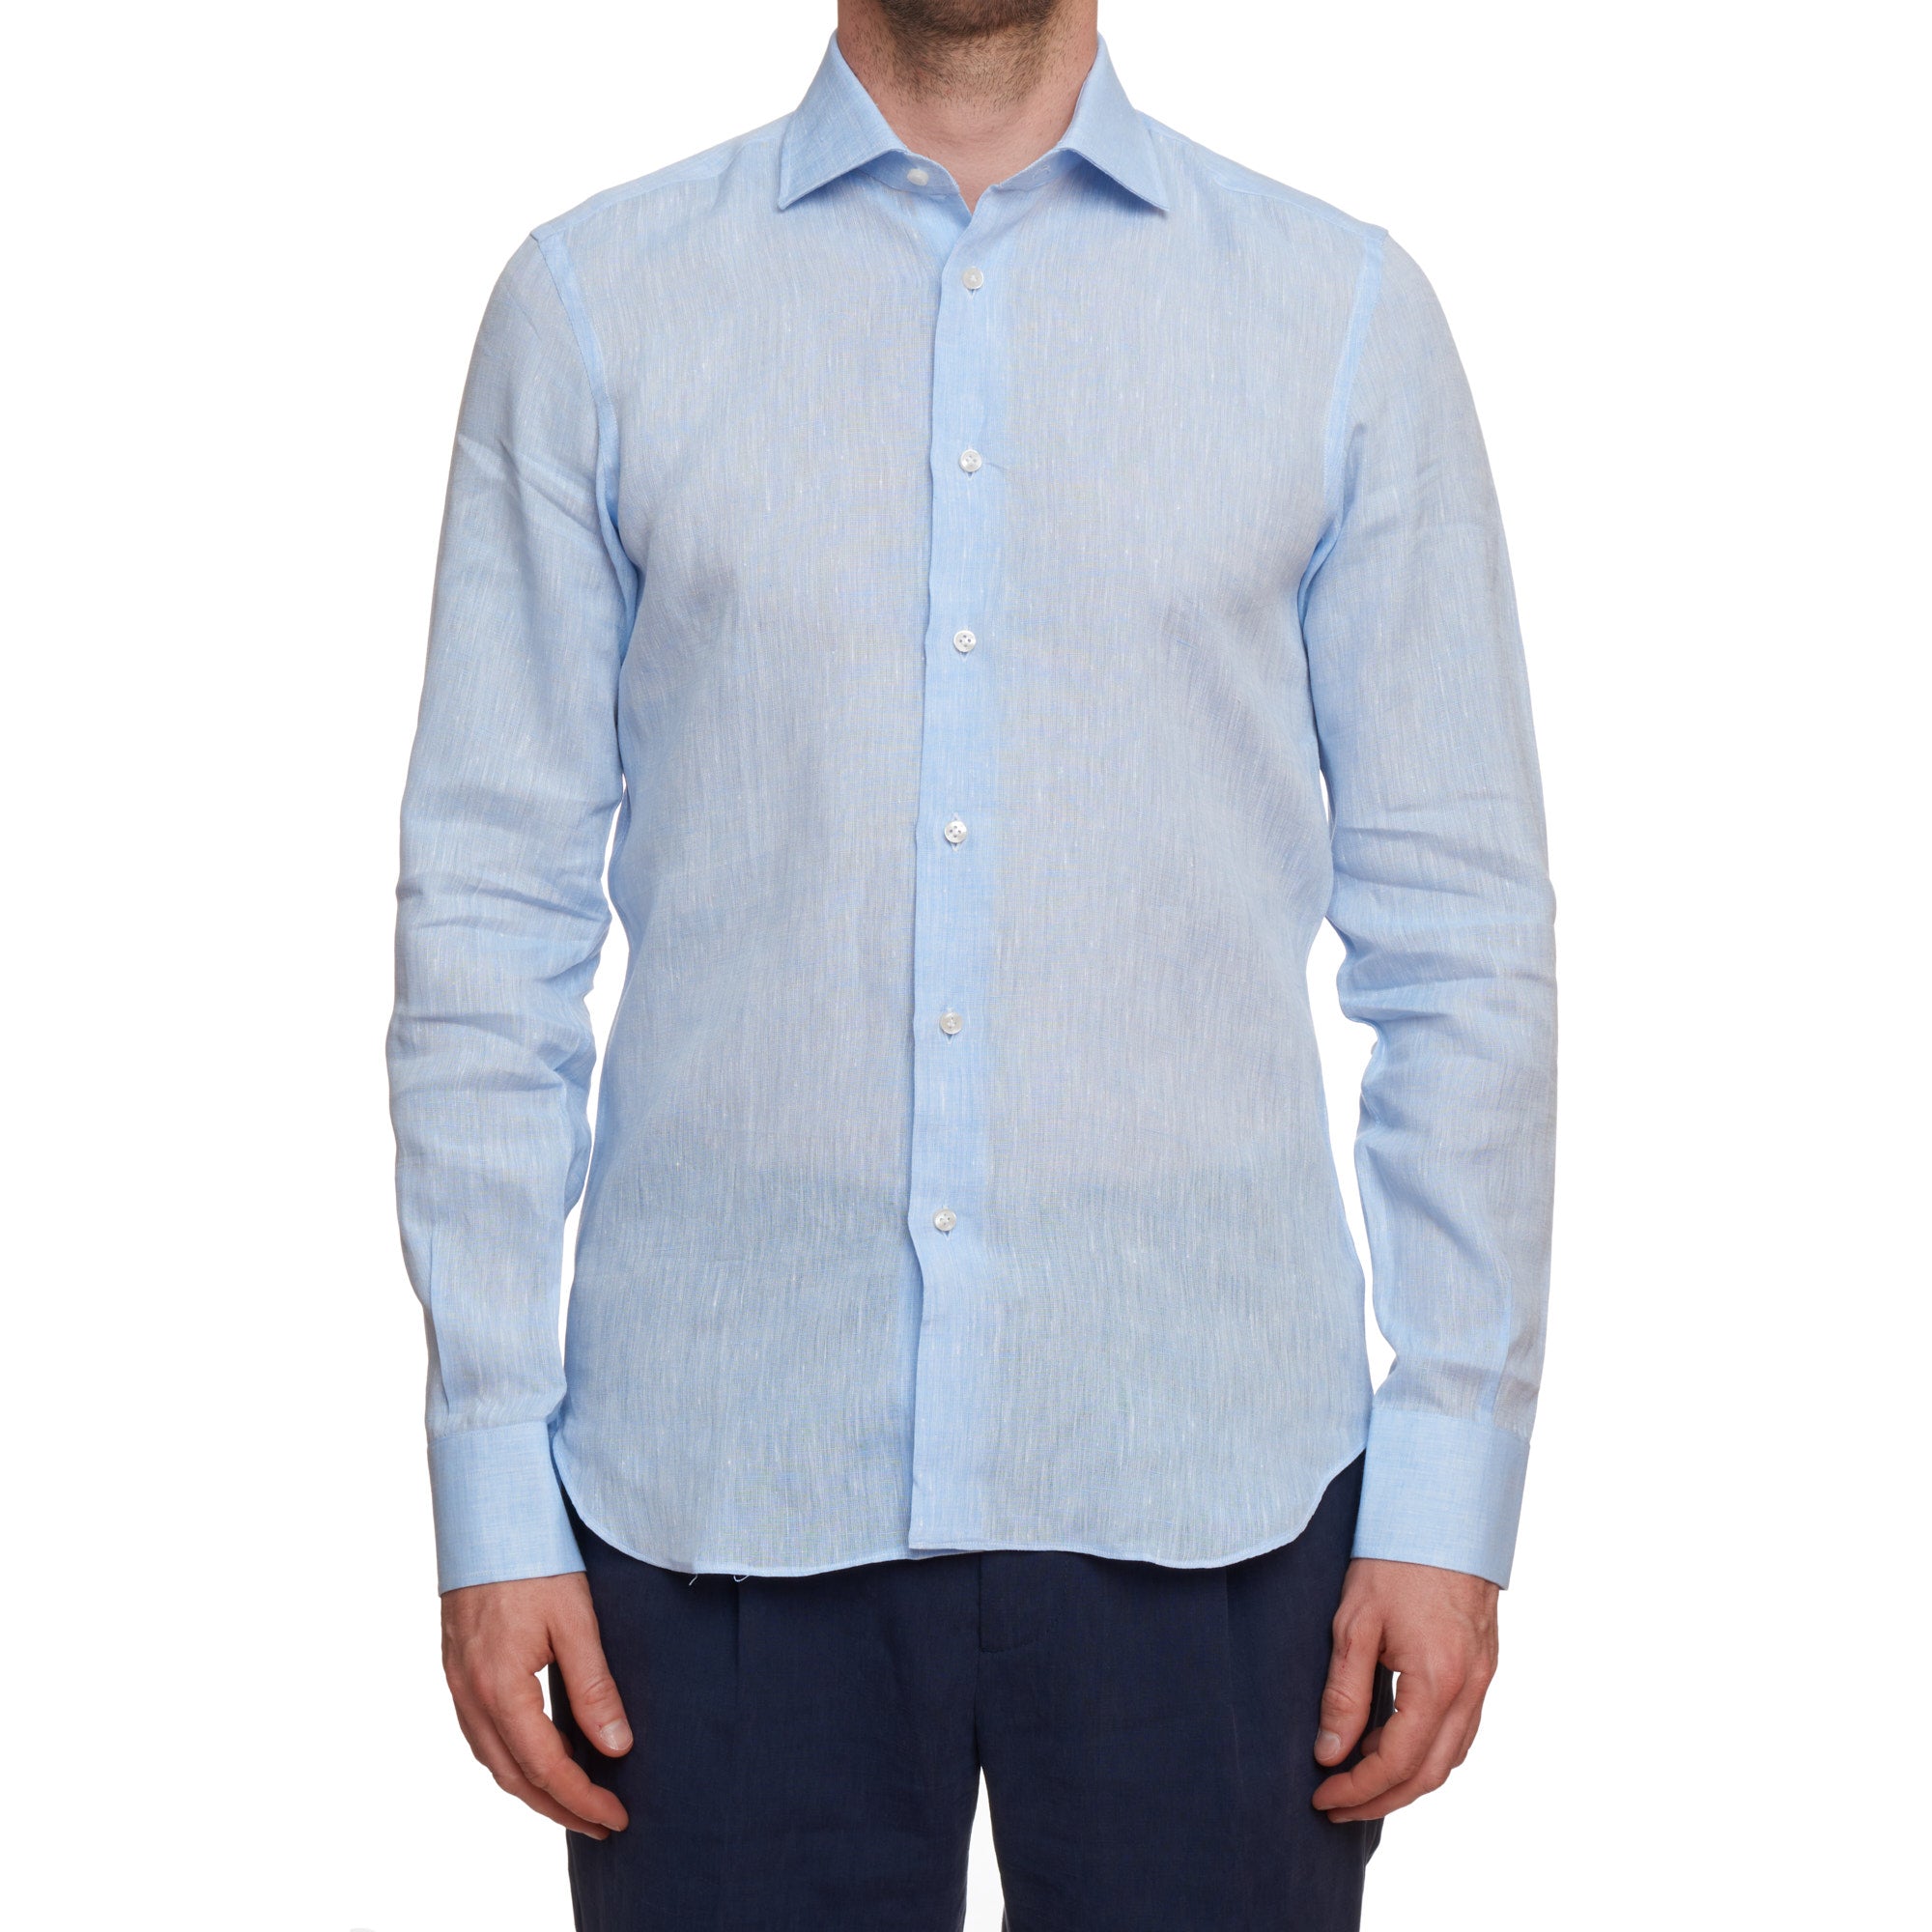 SARTORIO Napoli by KITON Light Blue Linen Spread Collar Shirt Slim Fit NEW SARTORIO